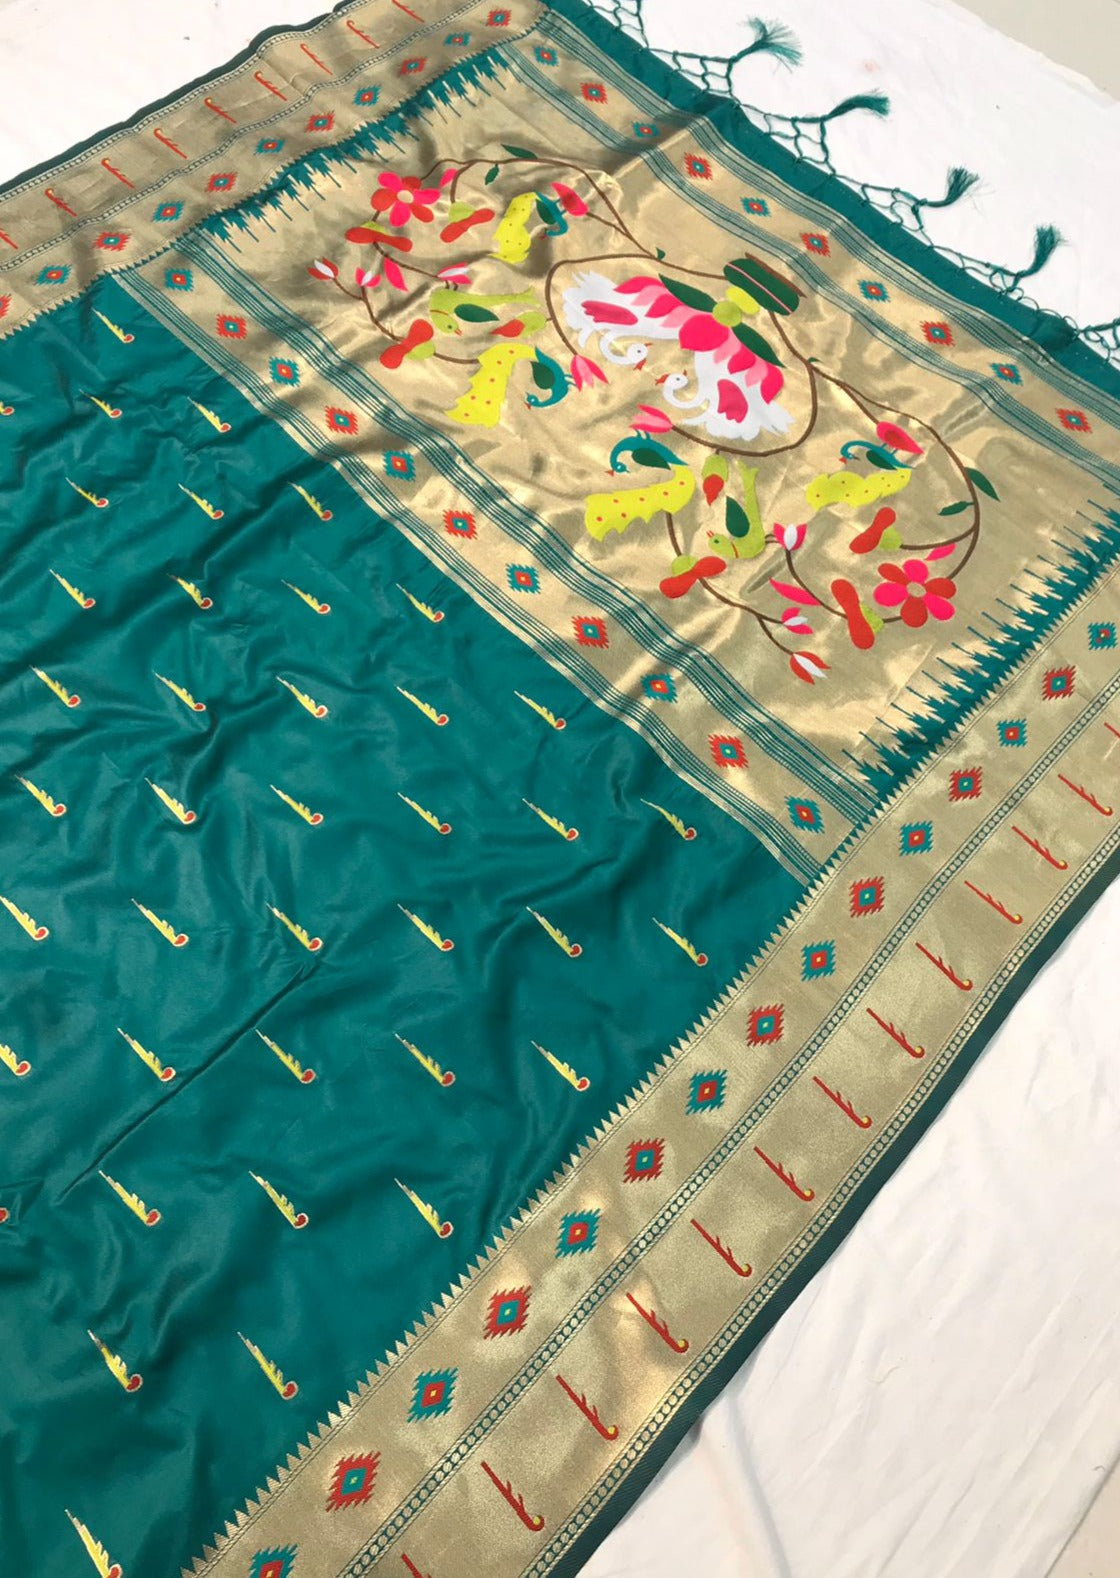 Handloom paithani sarees online usa uk.